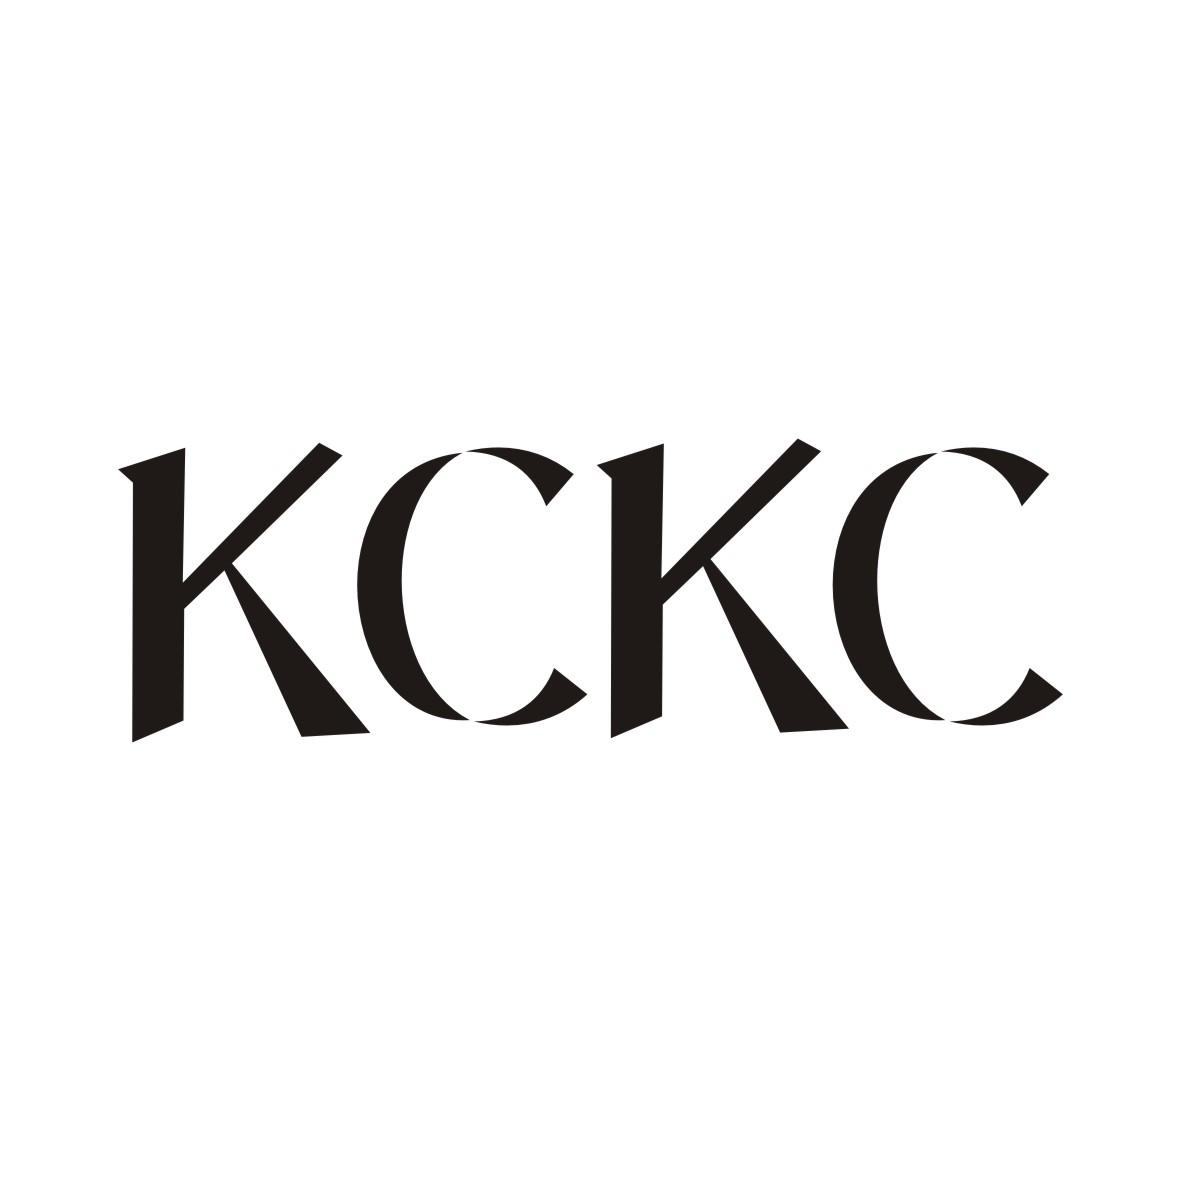 KCKC